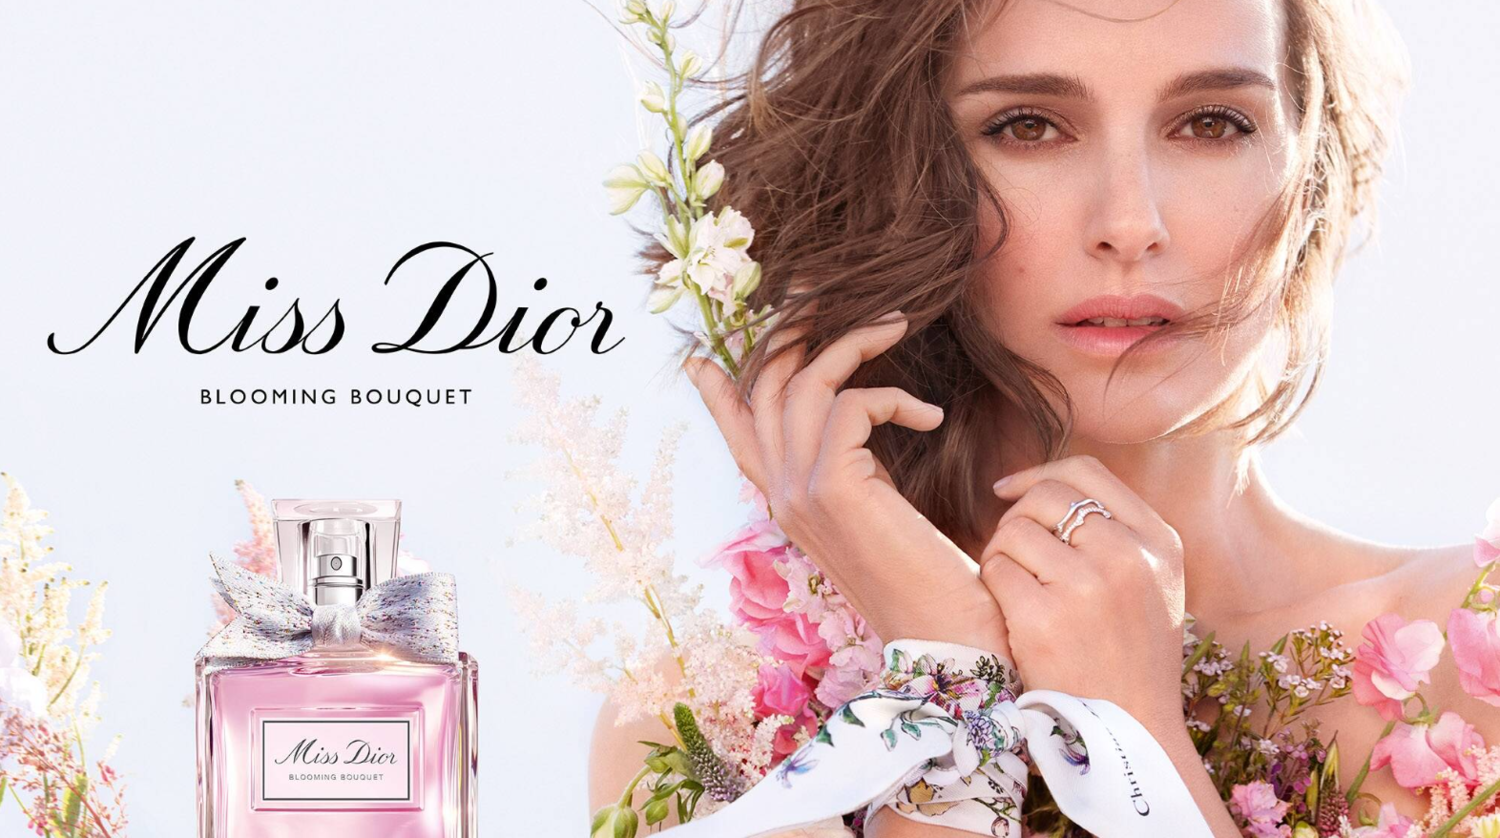 Dior promotion